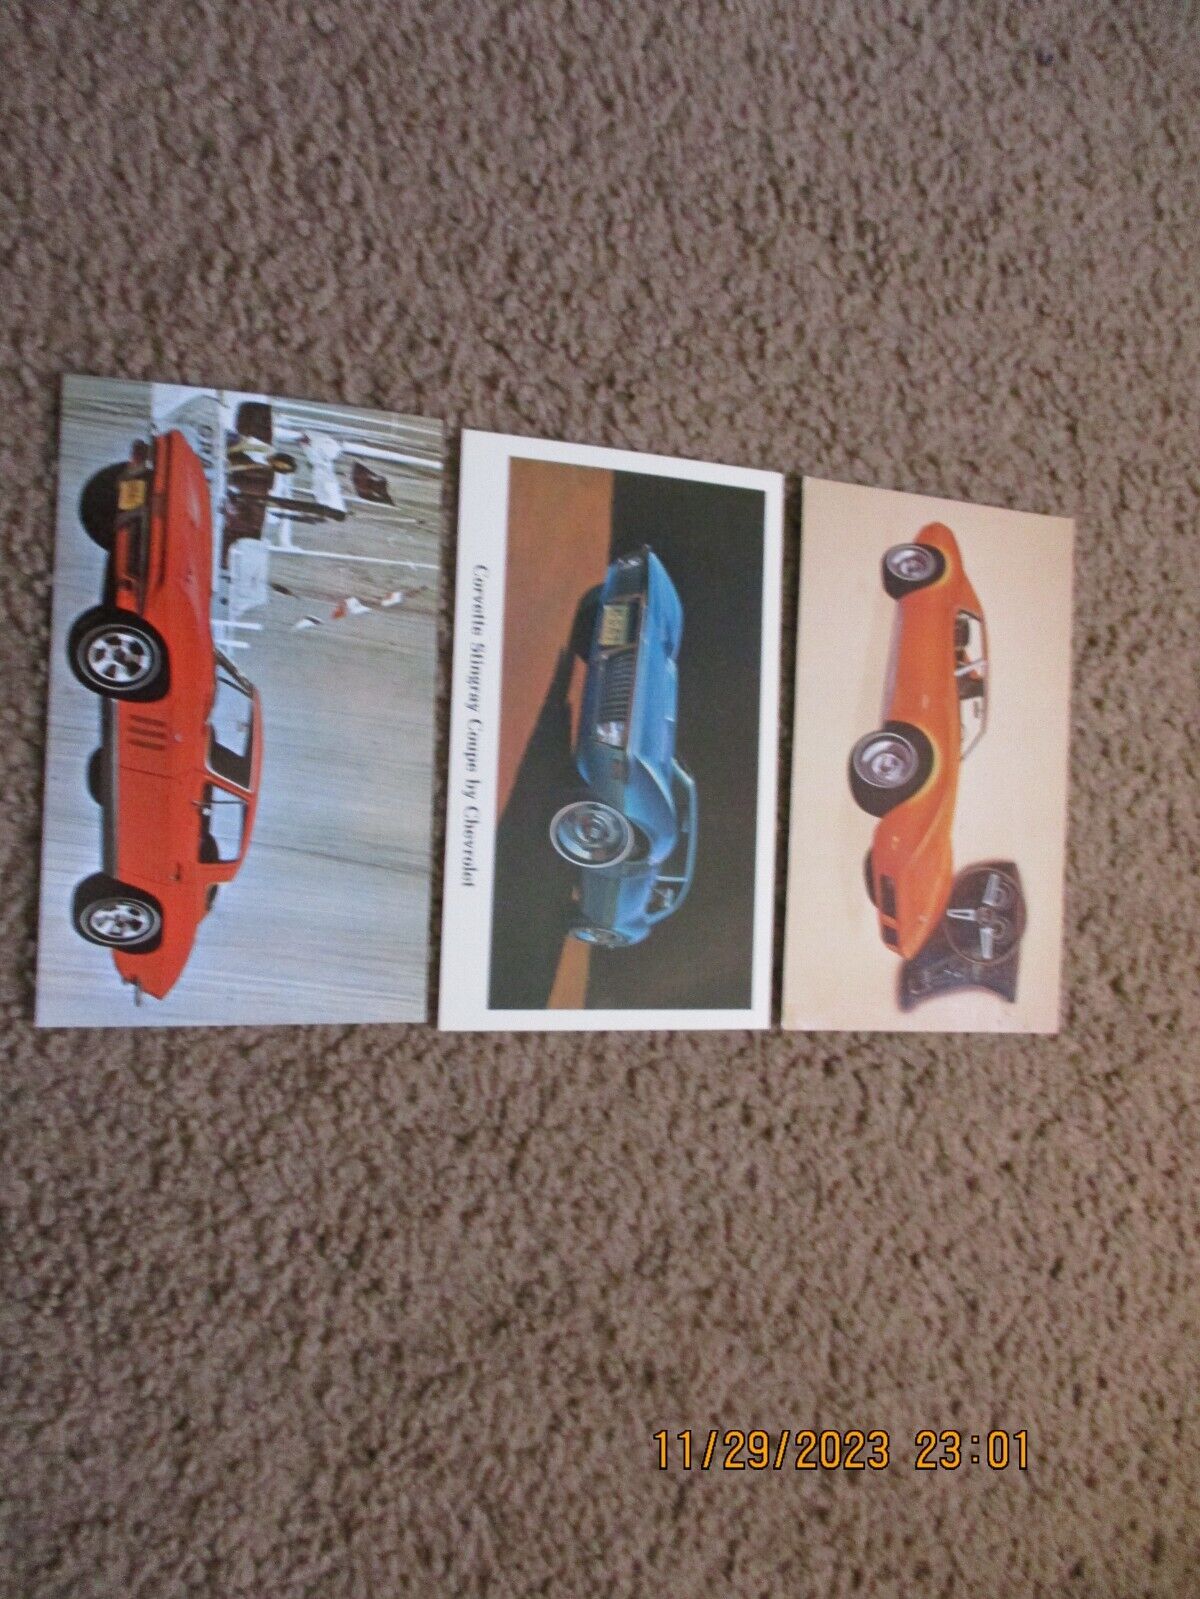 1966  1971  1974 Chevrolet Corvette Post Cards (3) 2 ORIGINALS, 1 REPRINT